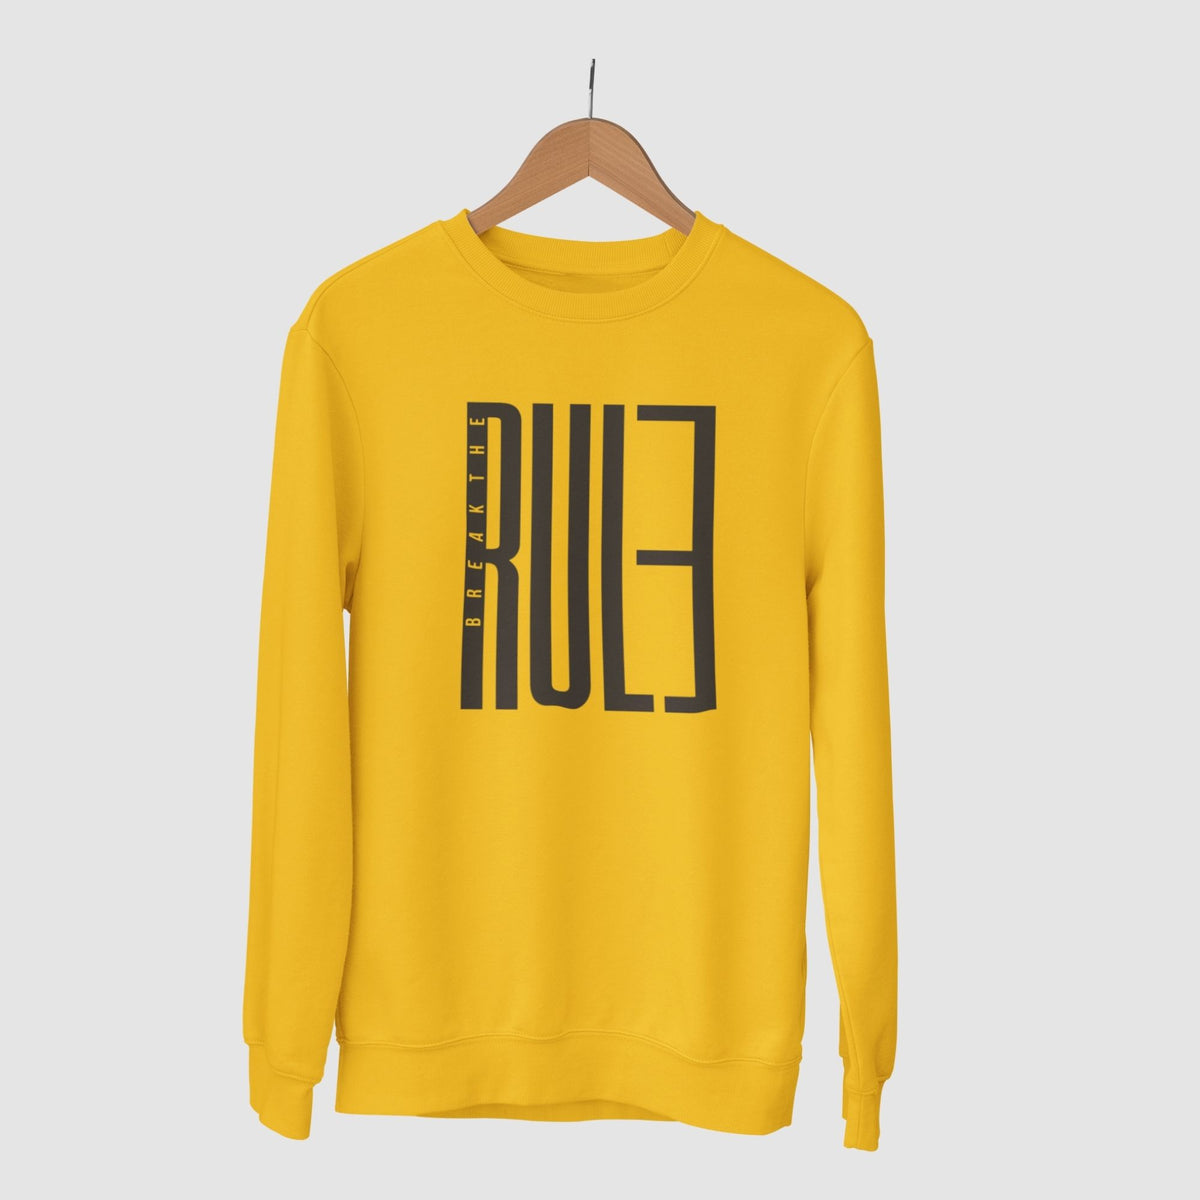 break-the-rule-cotton-printed-unisex-golden-yellow-sweatshirt-gogirgit-com